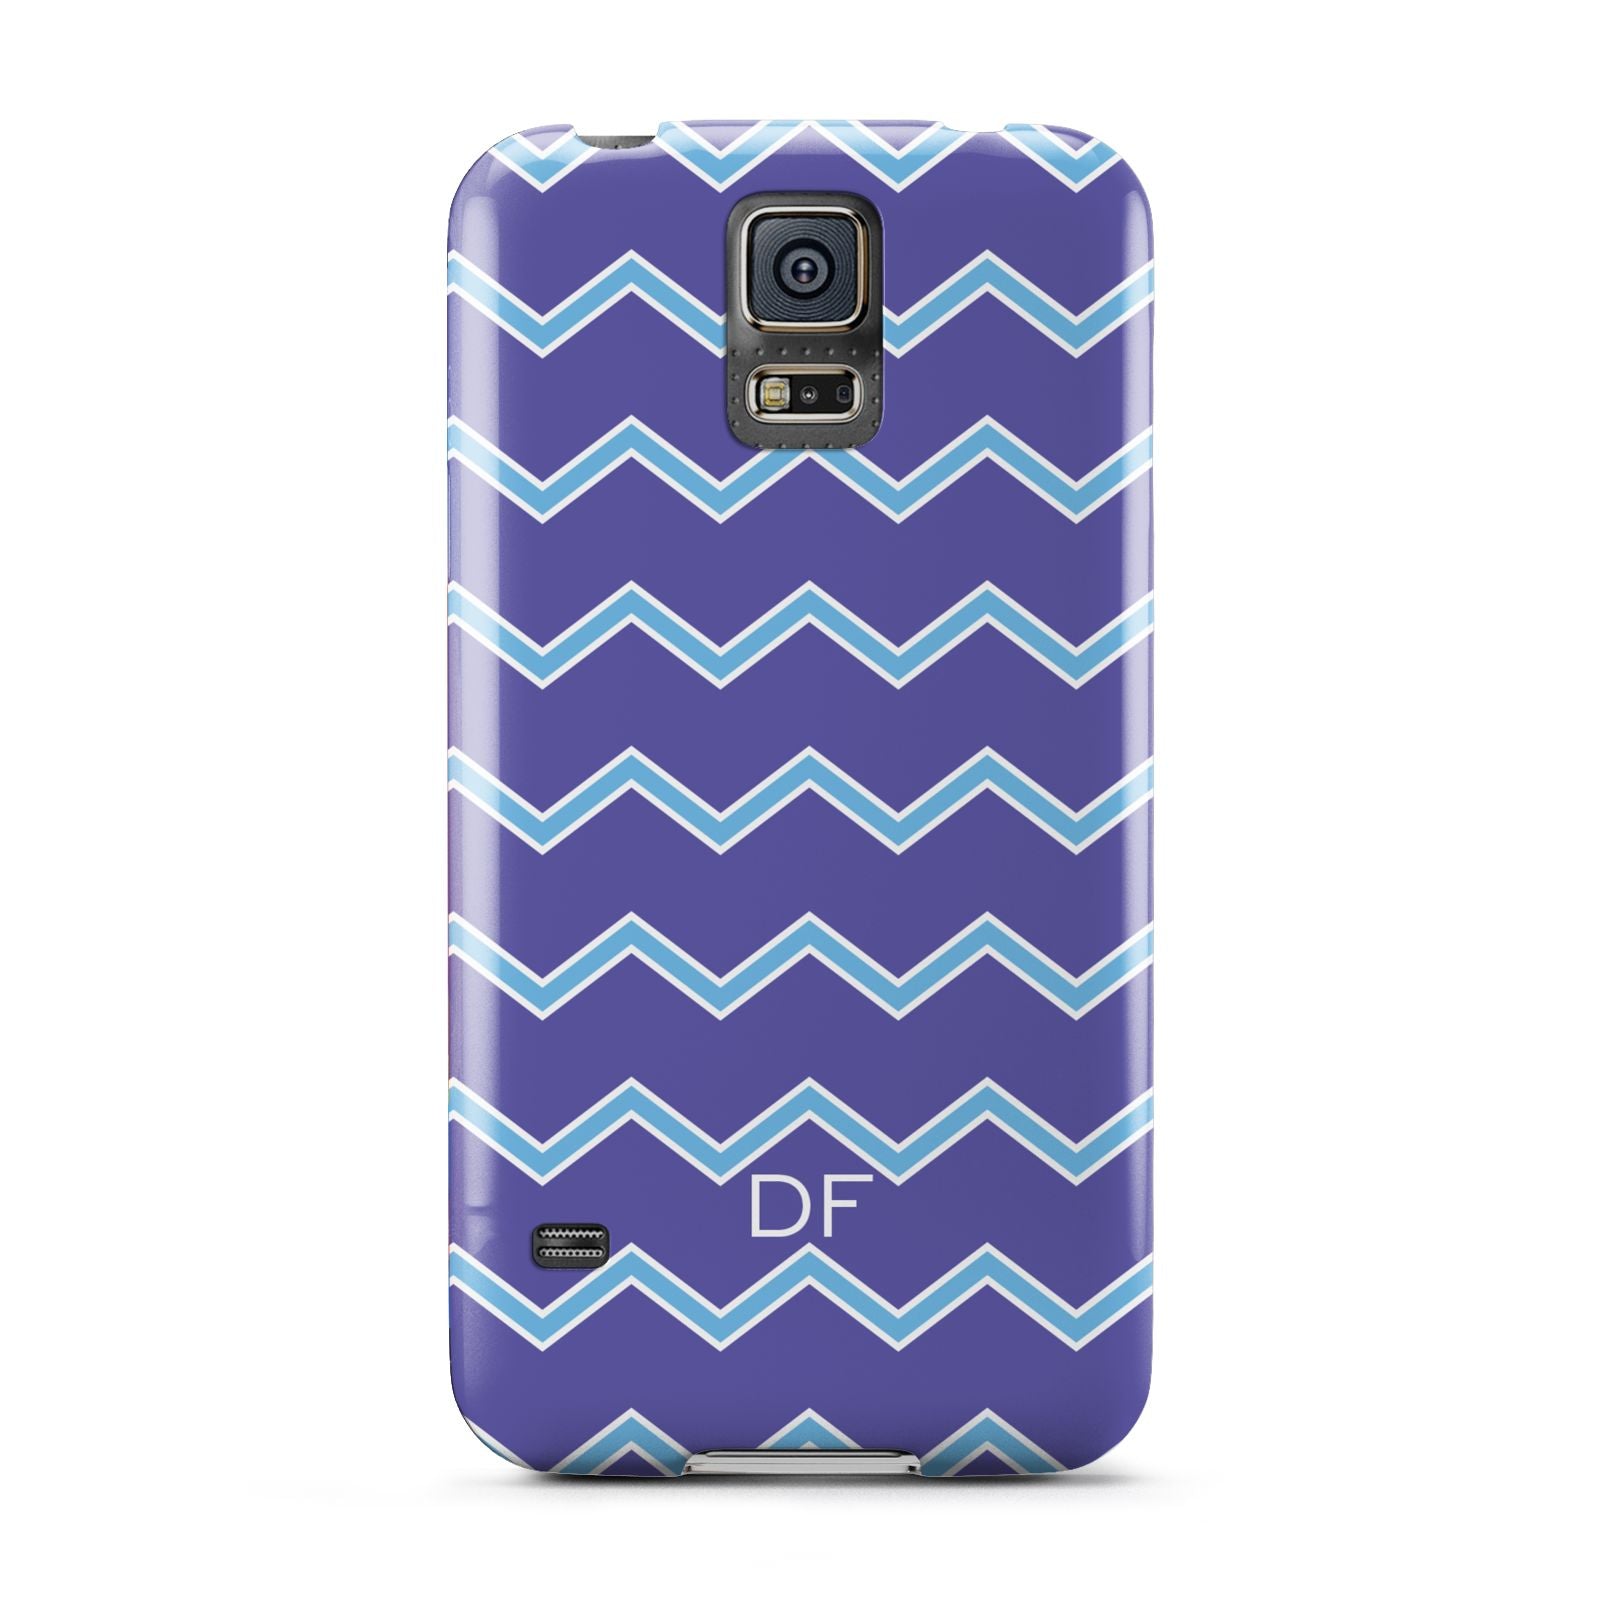 Personalised Chevron 2 Tone Samsung Galaxy S5 Case